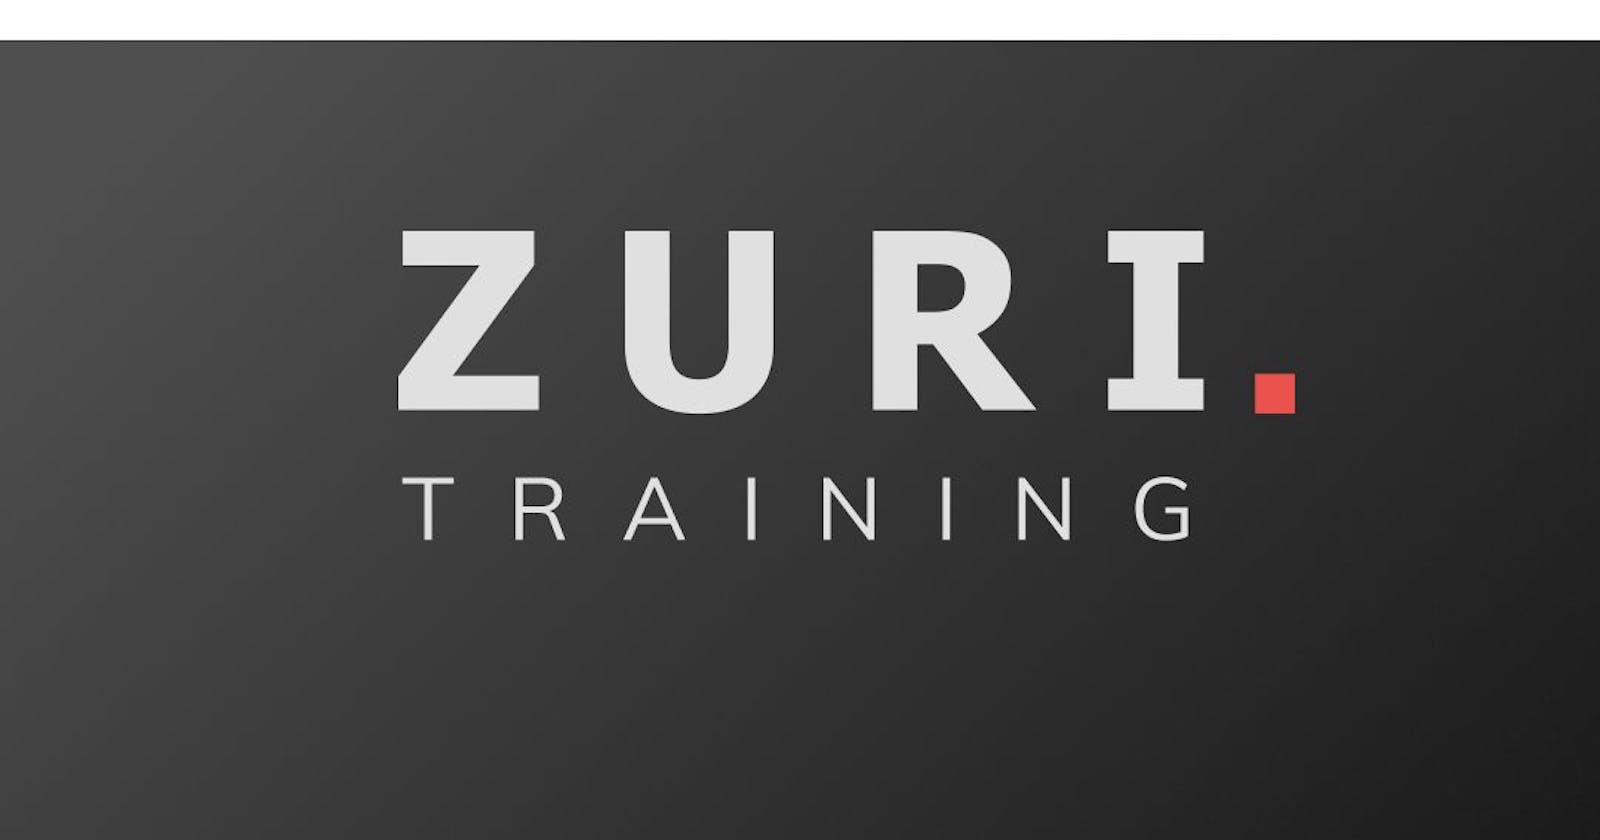 Zuri x Ingressive4good Training - My Experience So Far